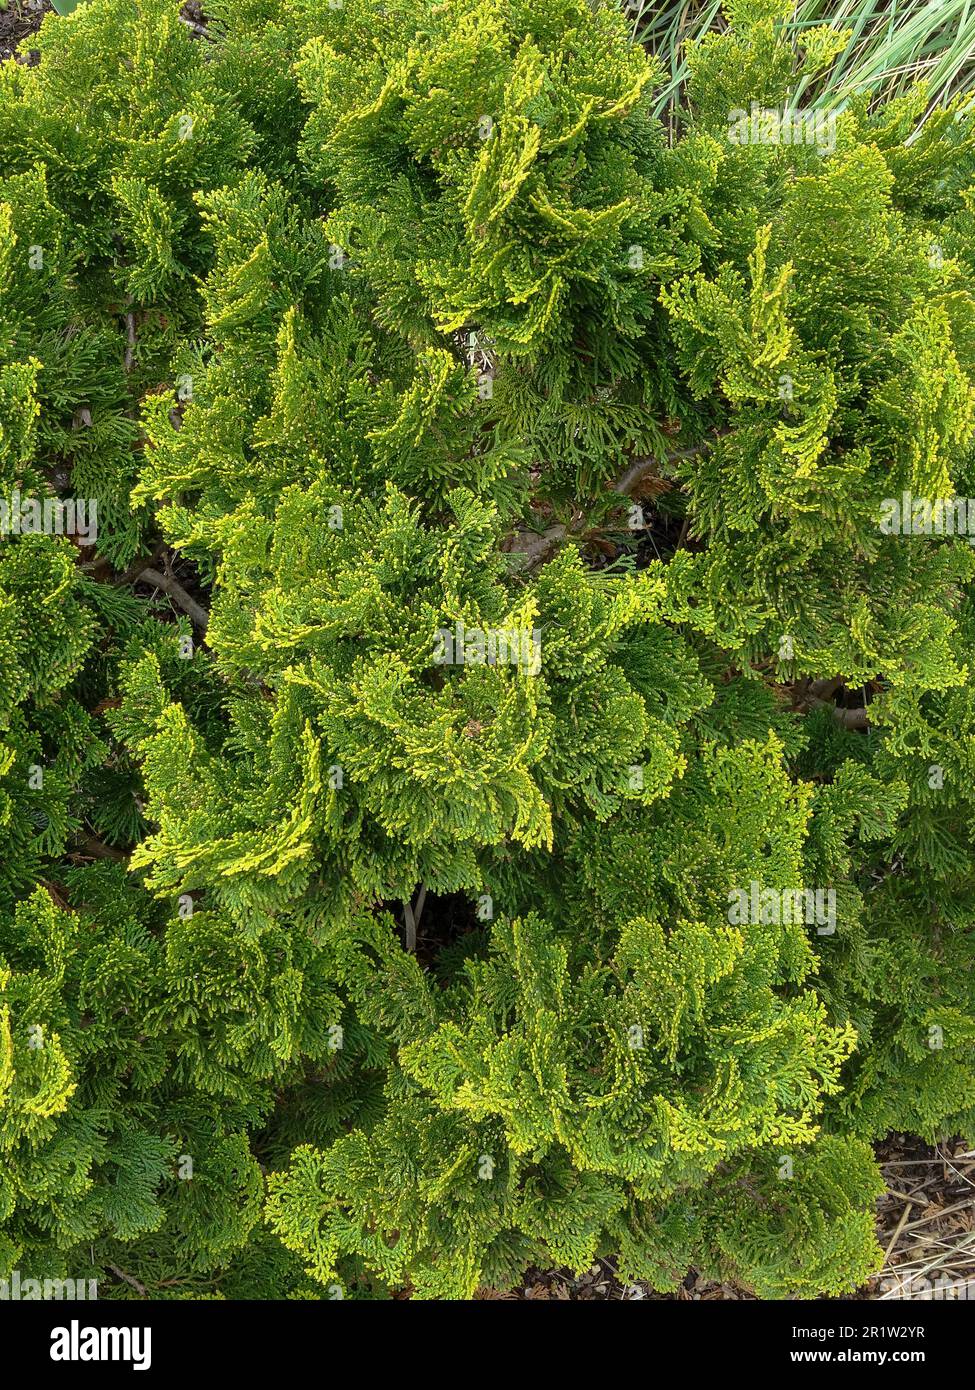 Close up plant portrait of highly patterned Chamaecyparis Obtusa Nana Gracilis Stock Photo